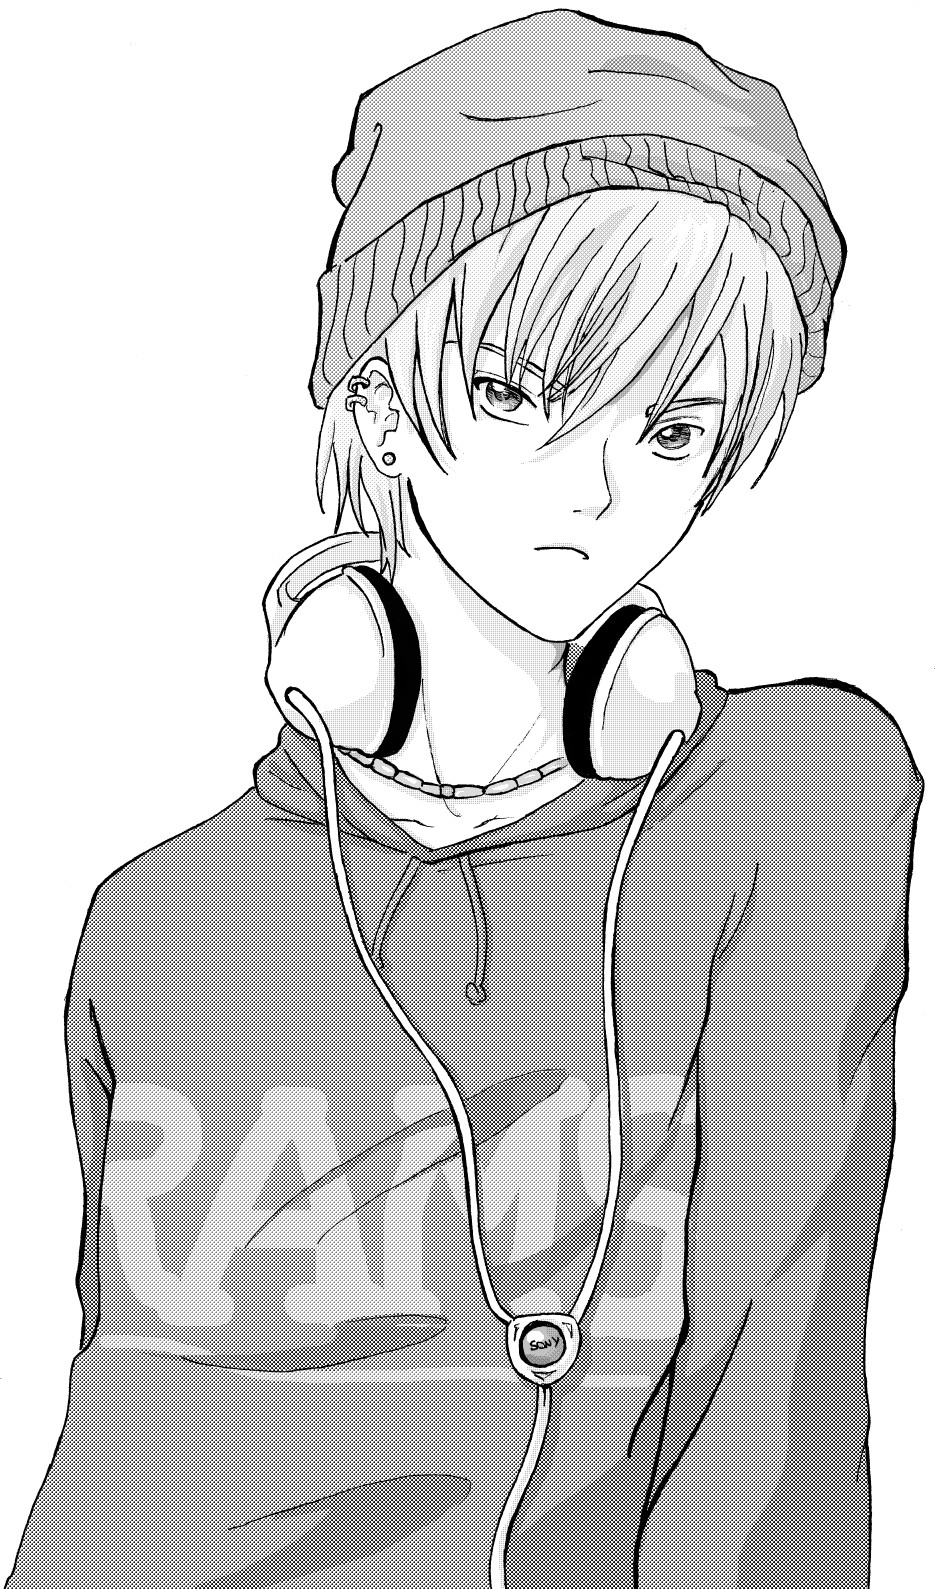 16 Anime Boy Listening To Music Wallpapers  WallpaperSafari